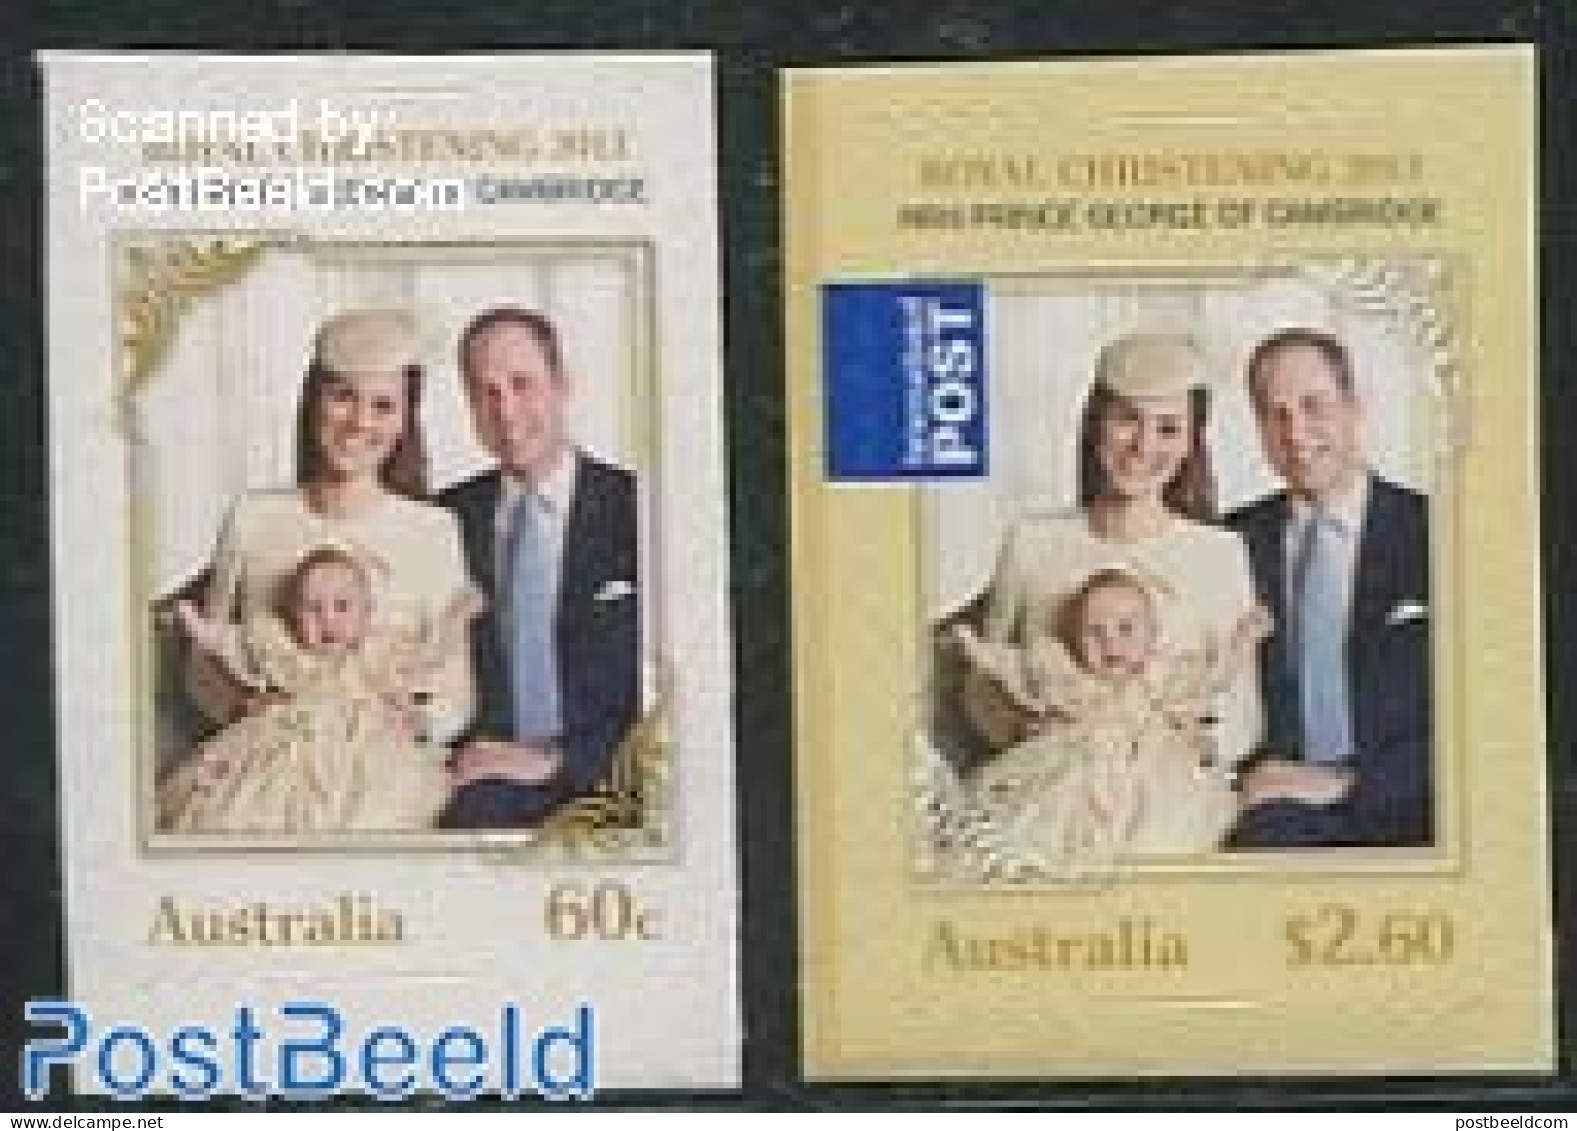 Australia 2014 Royal Christening 2v S-a, Mint NH, History - Kings & Queens (Royalty) - Ungebraucht